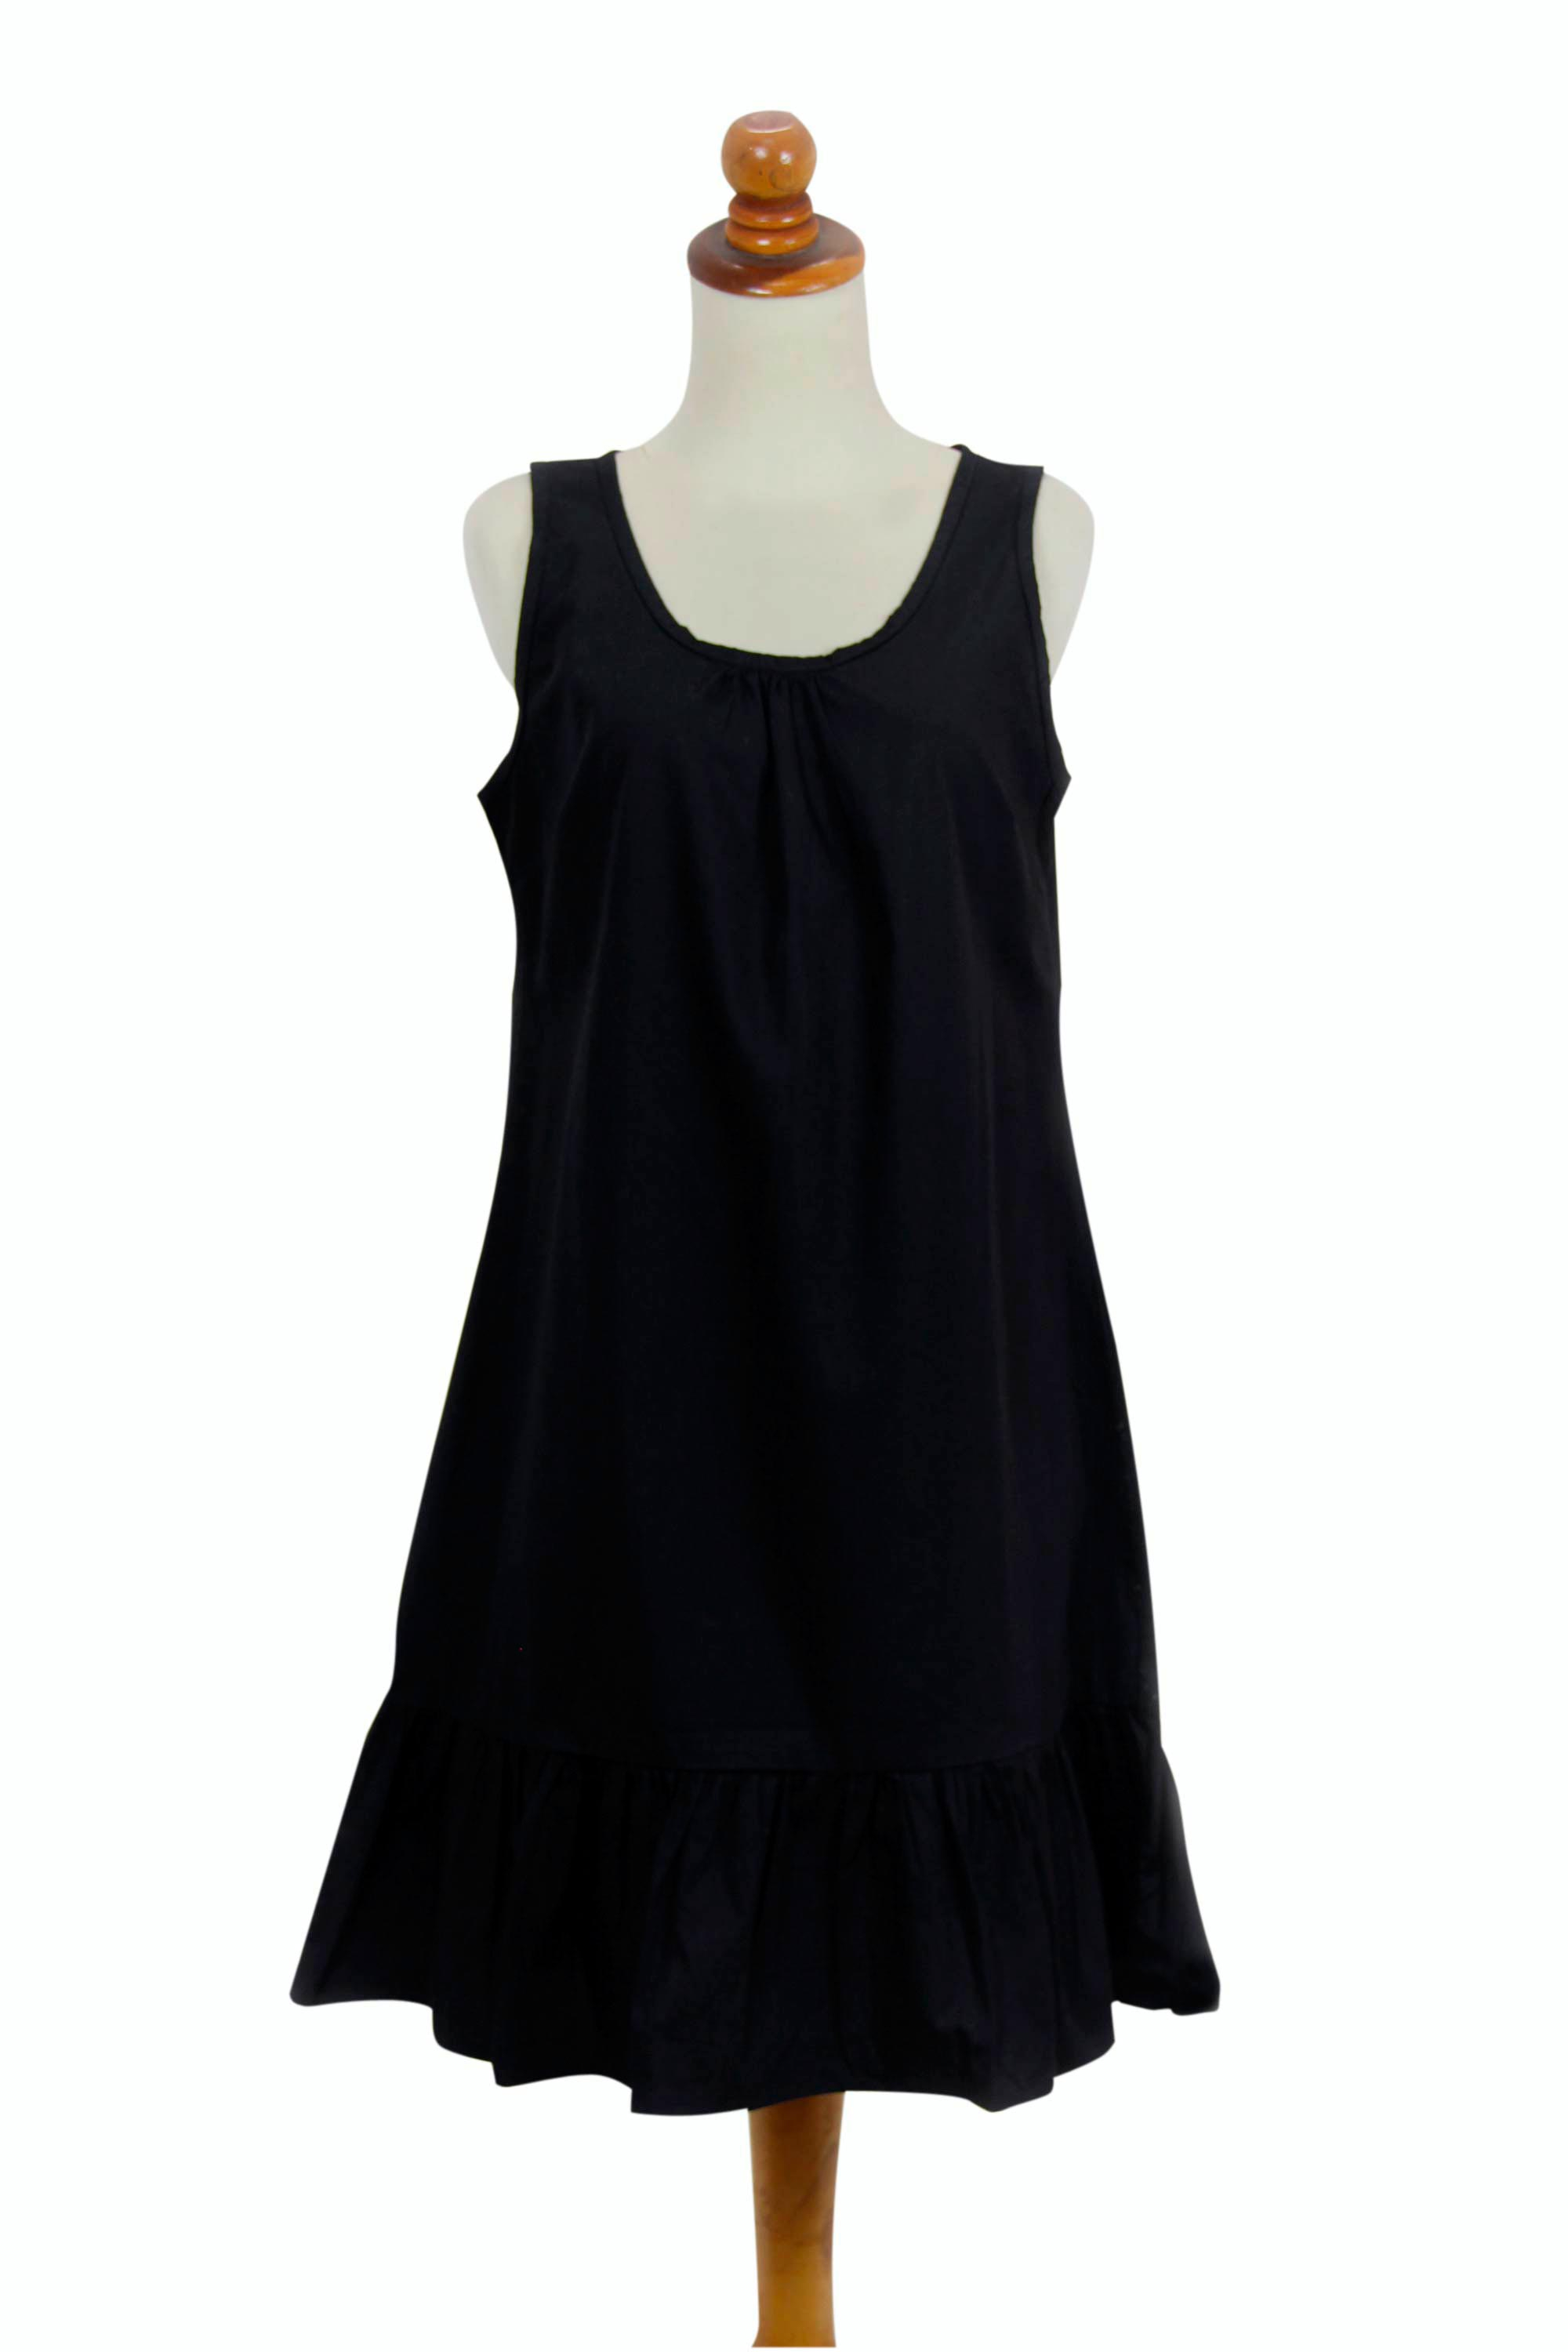 UNICEF Market | Sleeveless Short Black Cotton Dress from Bali - Black ...